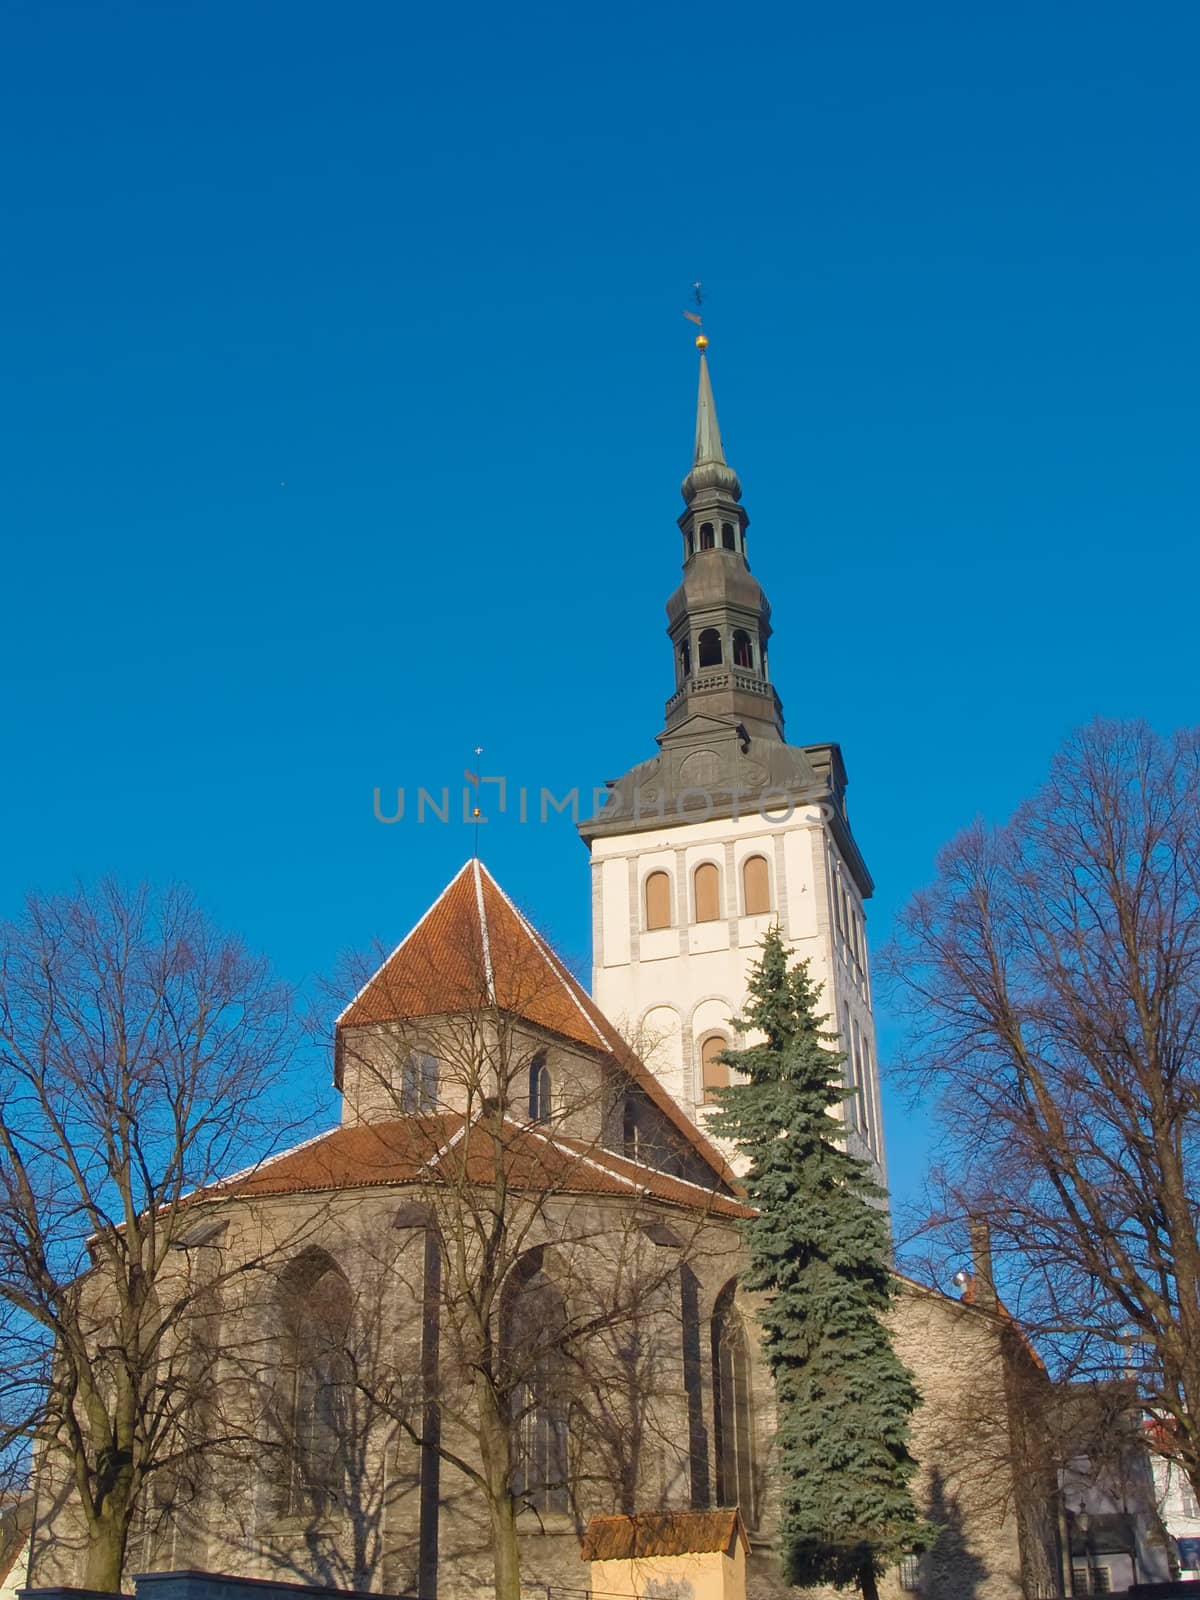 Belltower of cathedral Niguliste, Tallinn by lem